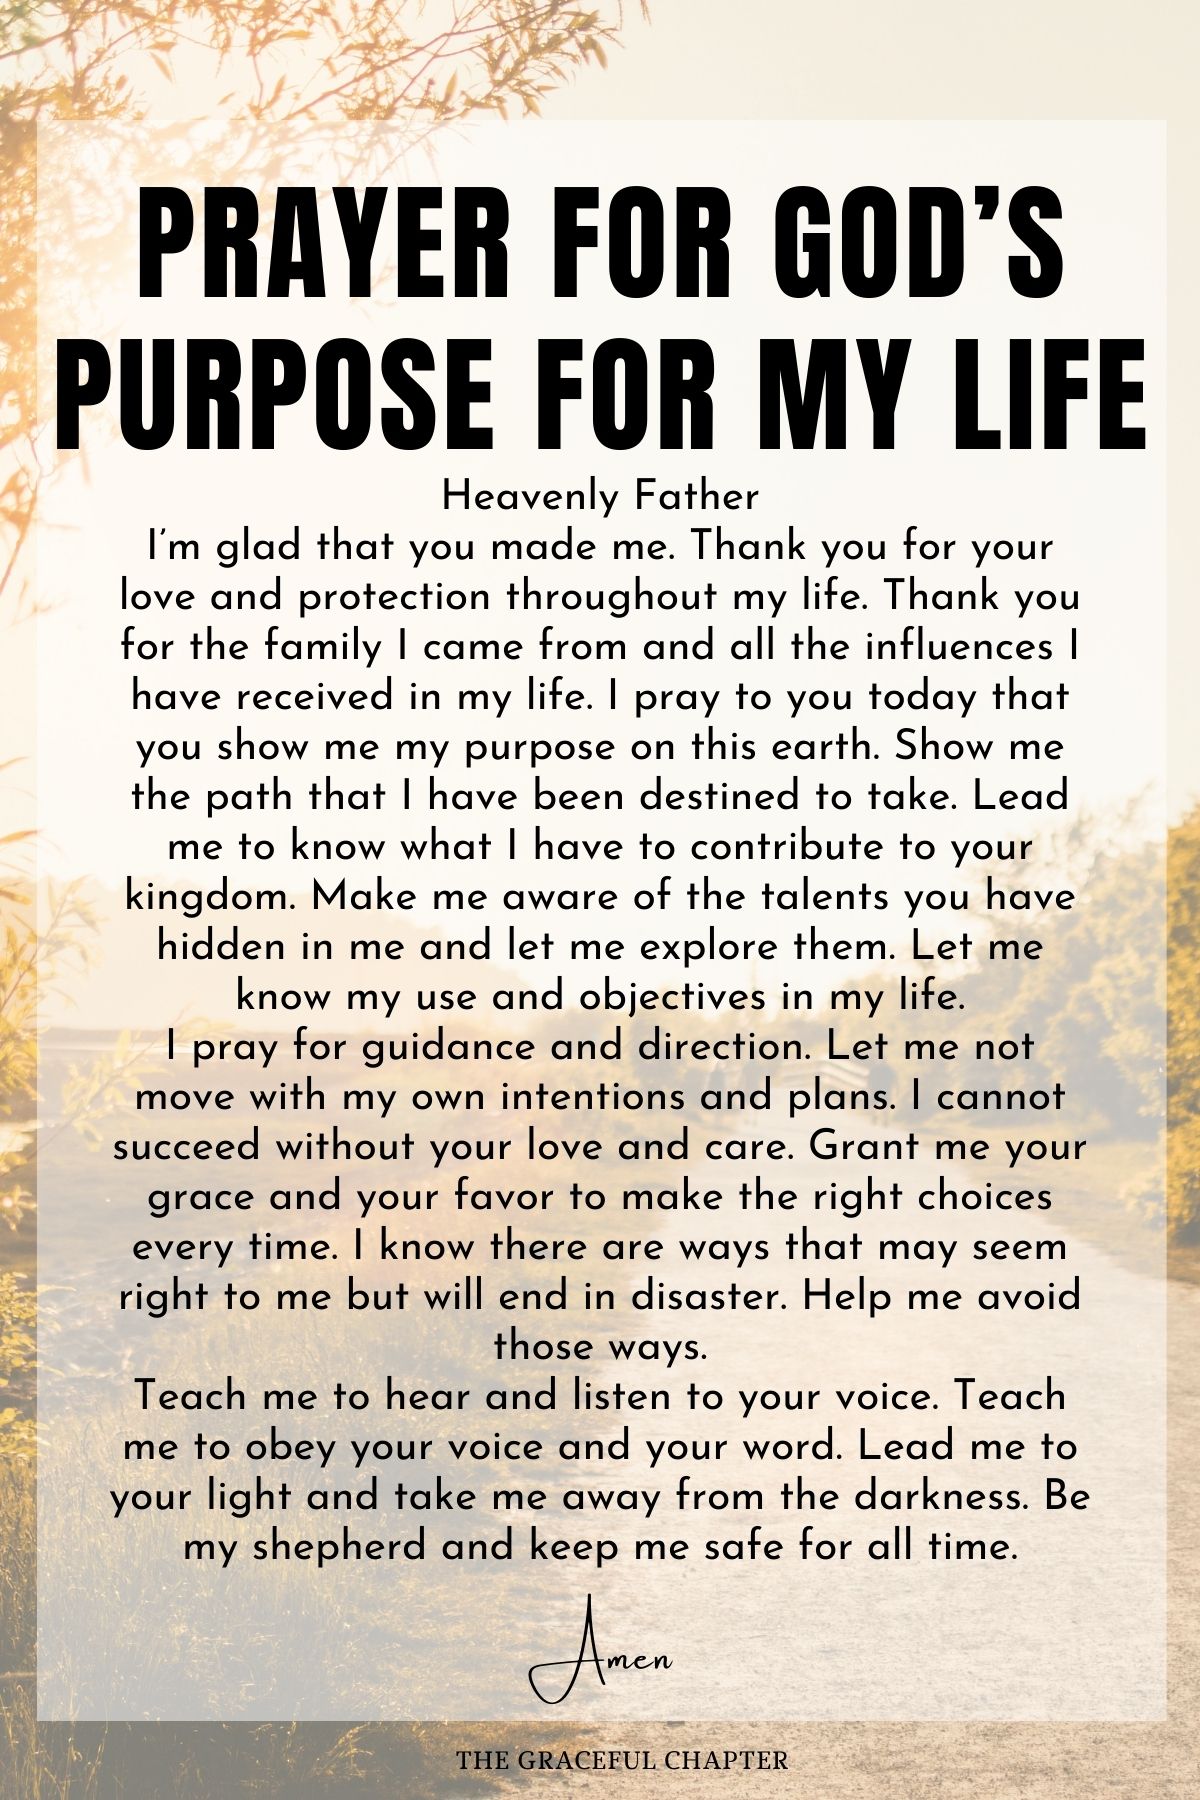 Prayer for God’s Purpose for my Life - prayers for purpose